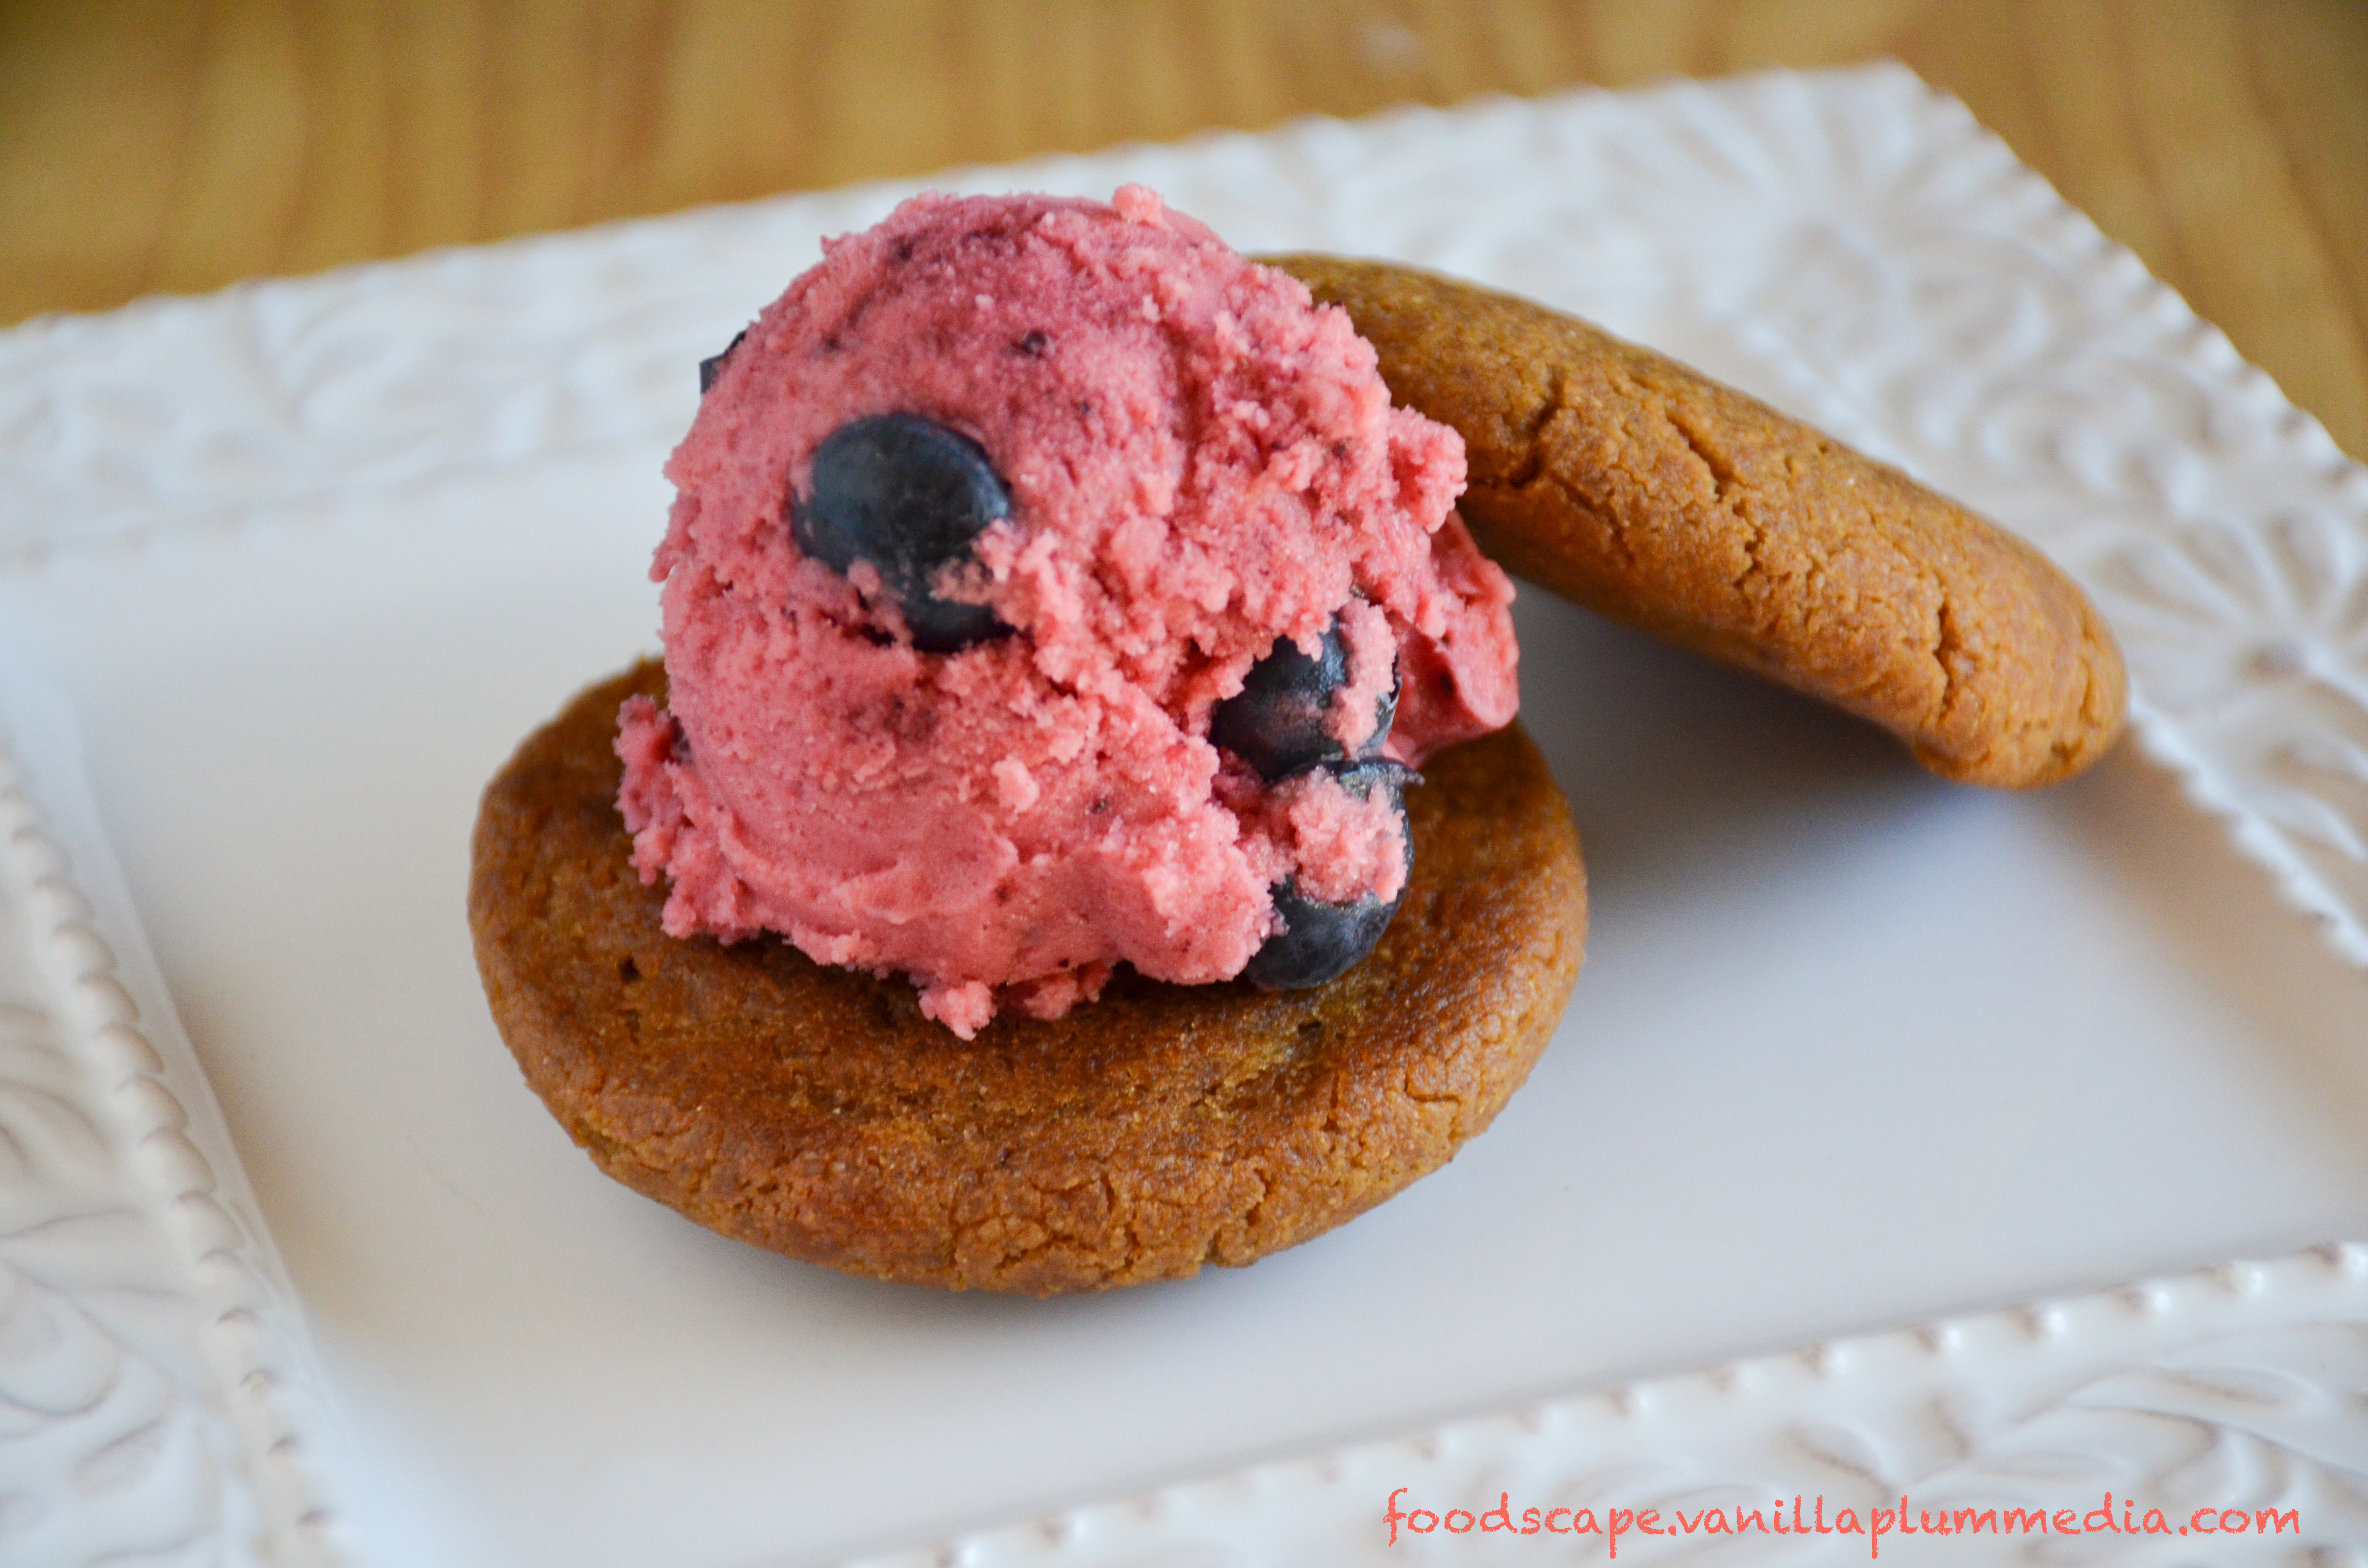 https://foodscape.vanillaplummedia.com/wp-content/uploads/2015/06/sweet-corn-and-berry-ice-cream-sandwiches-gluten-free.jpg